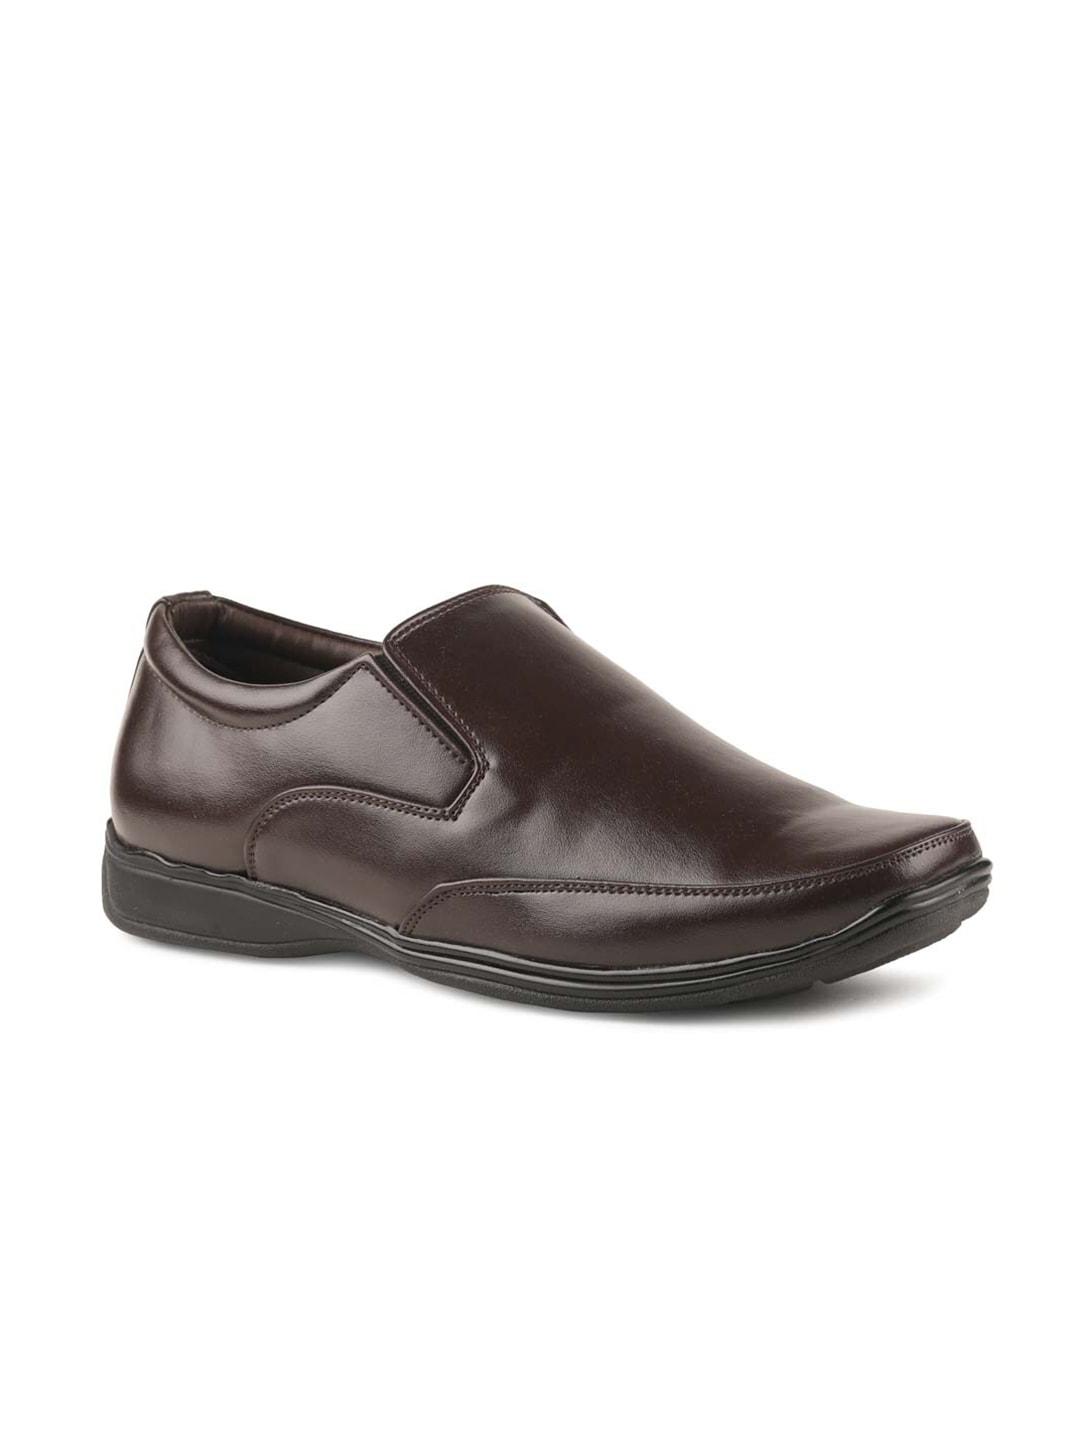 paragon-men-brown-max-formal-derby-shoes